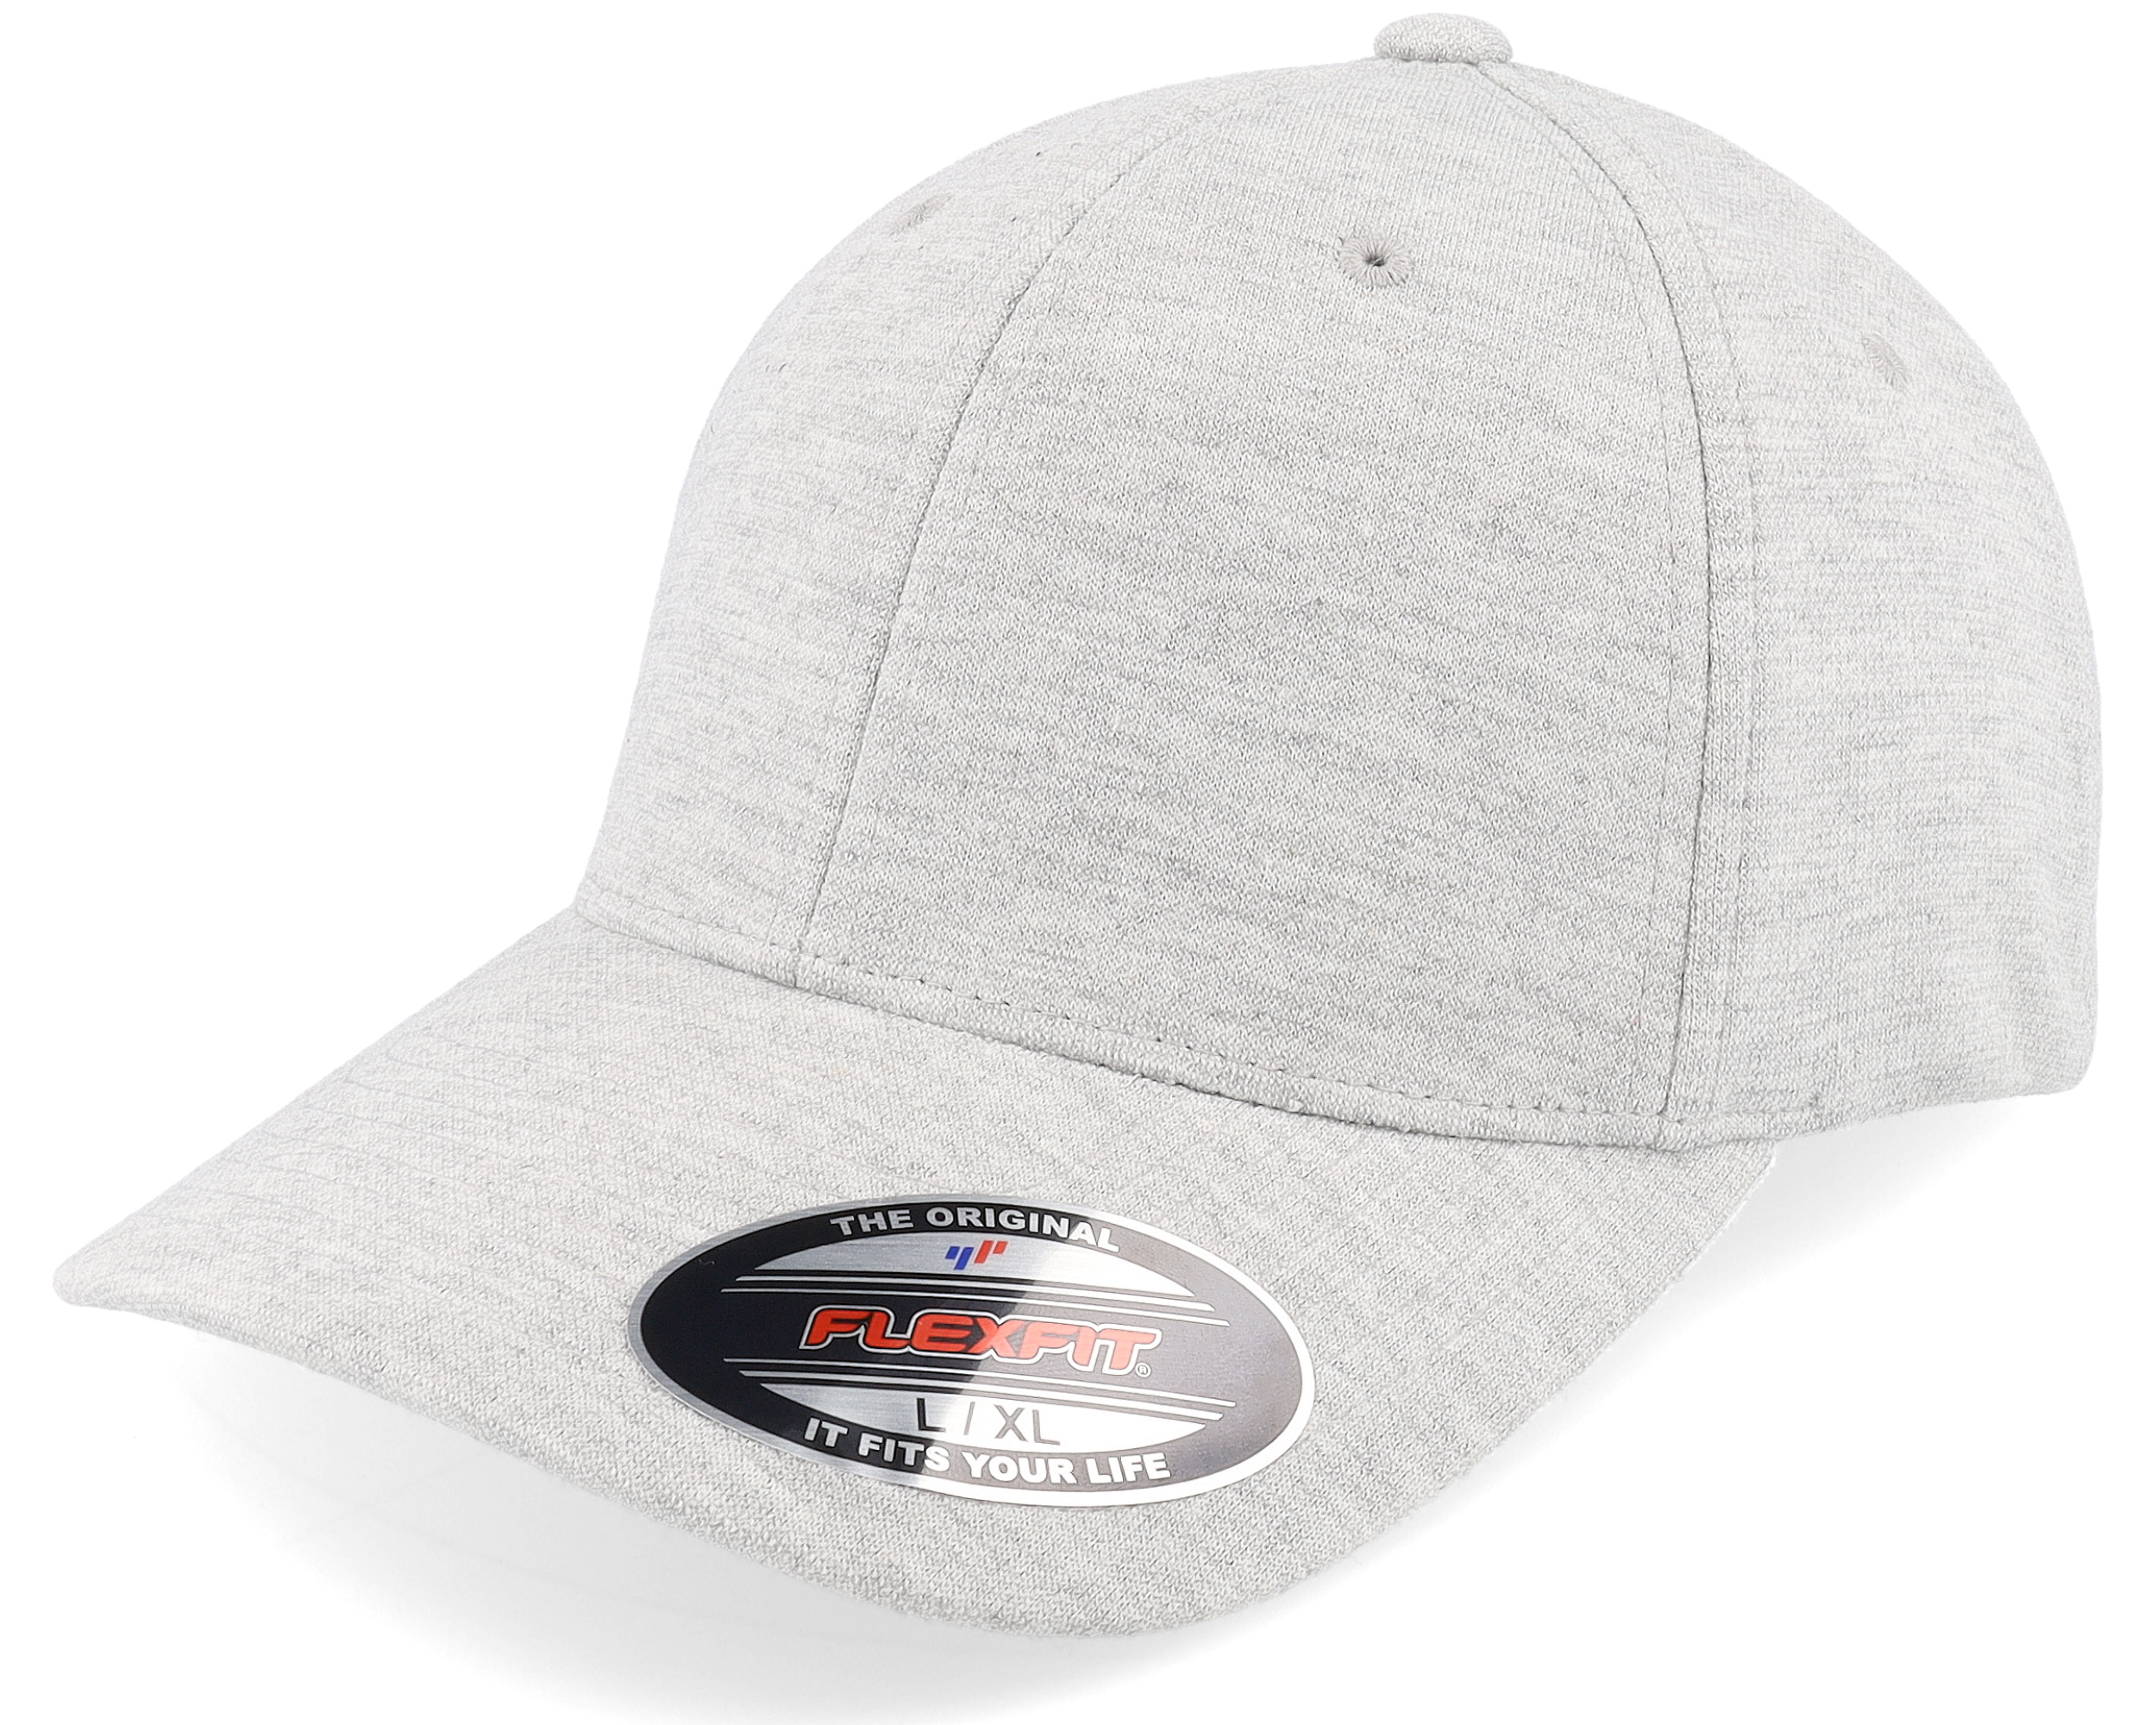 Double Jersey Heather - Grey cap Flexfit